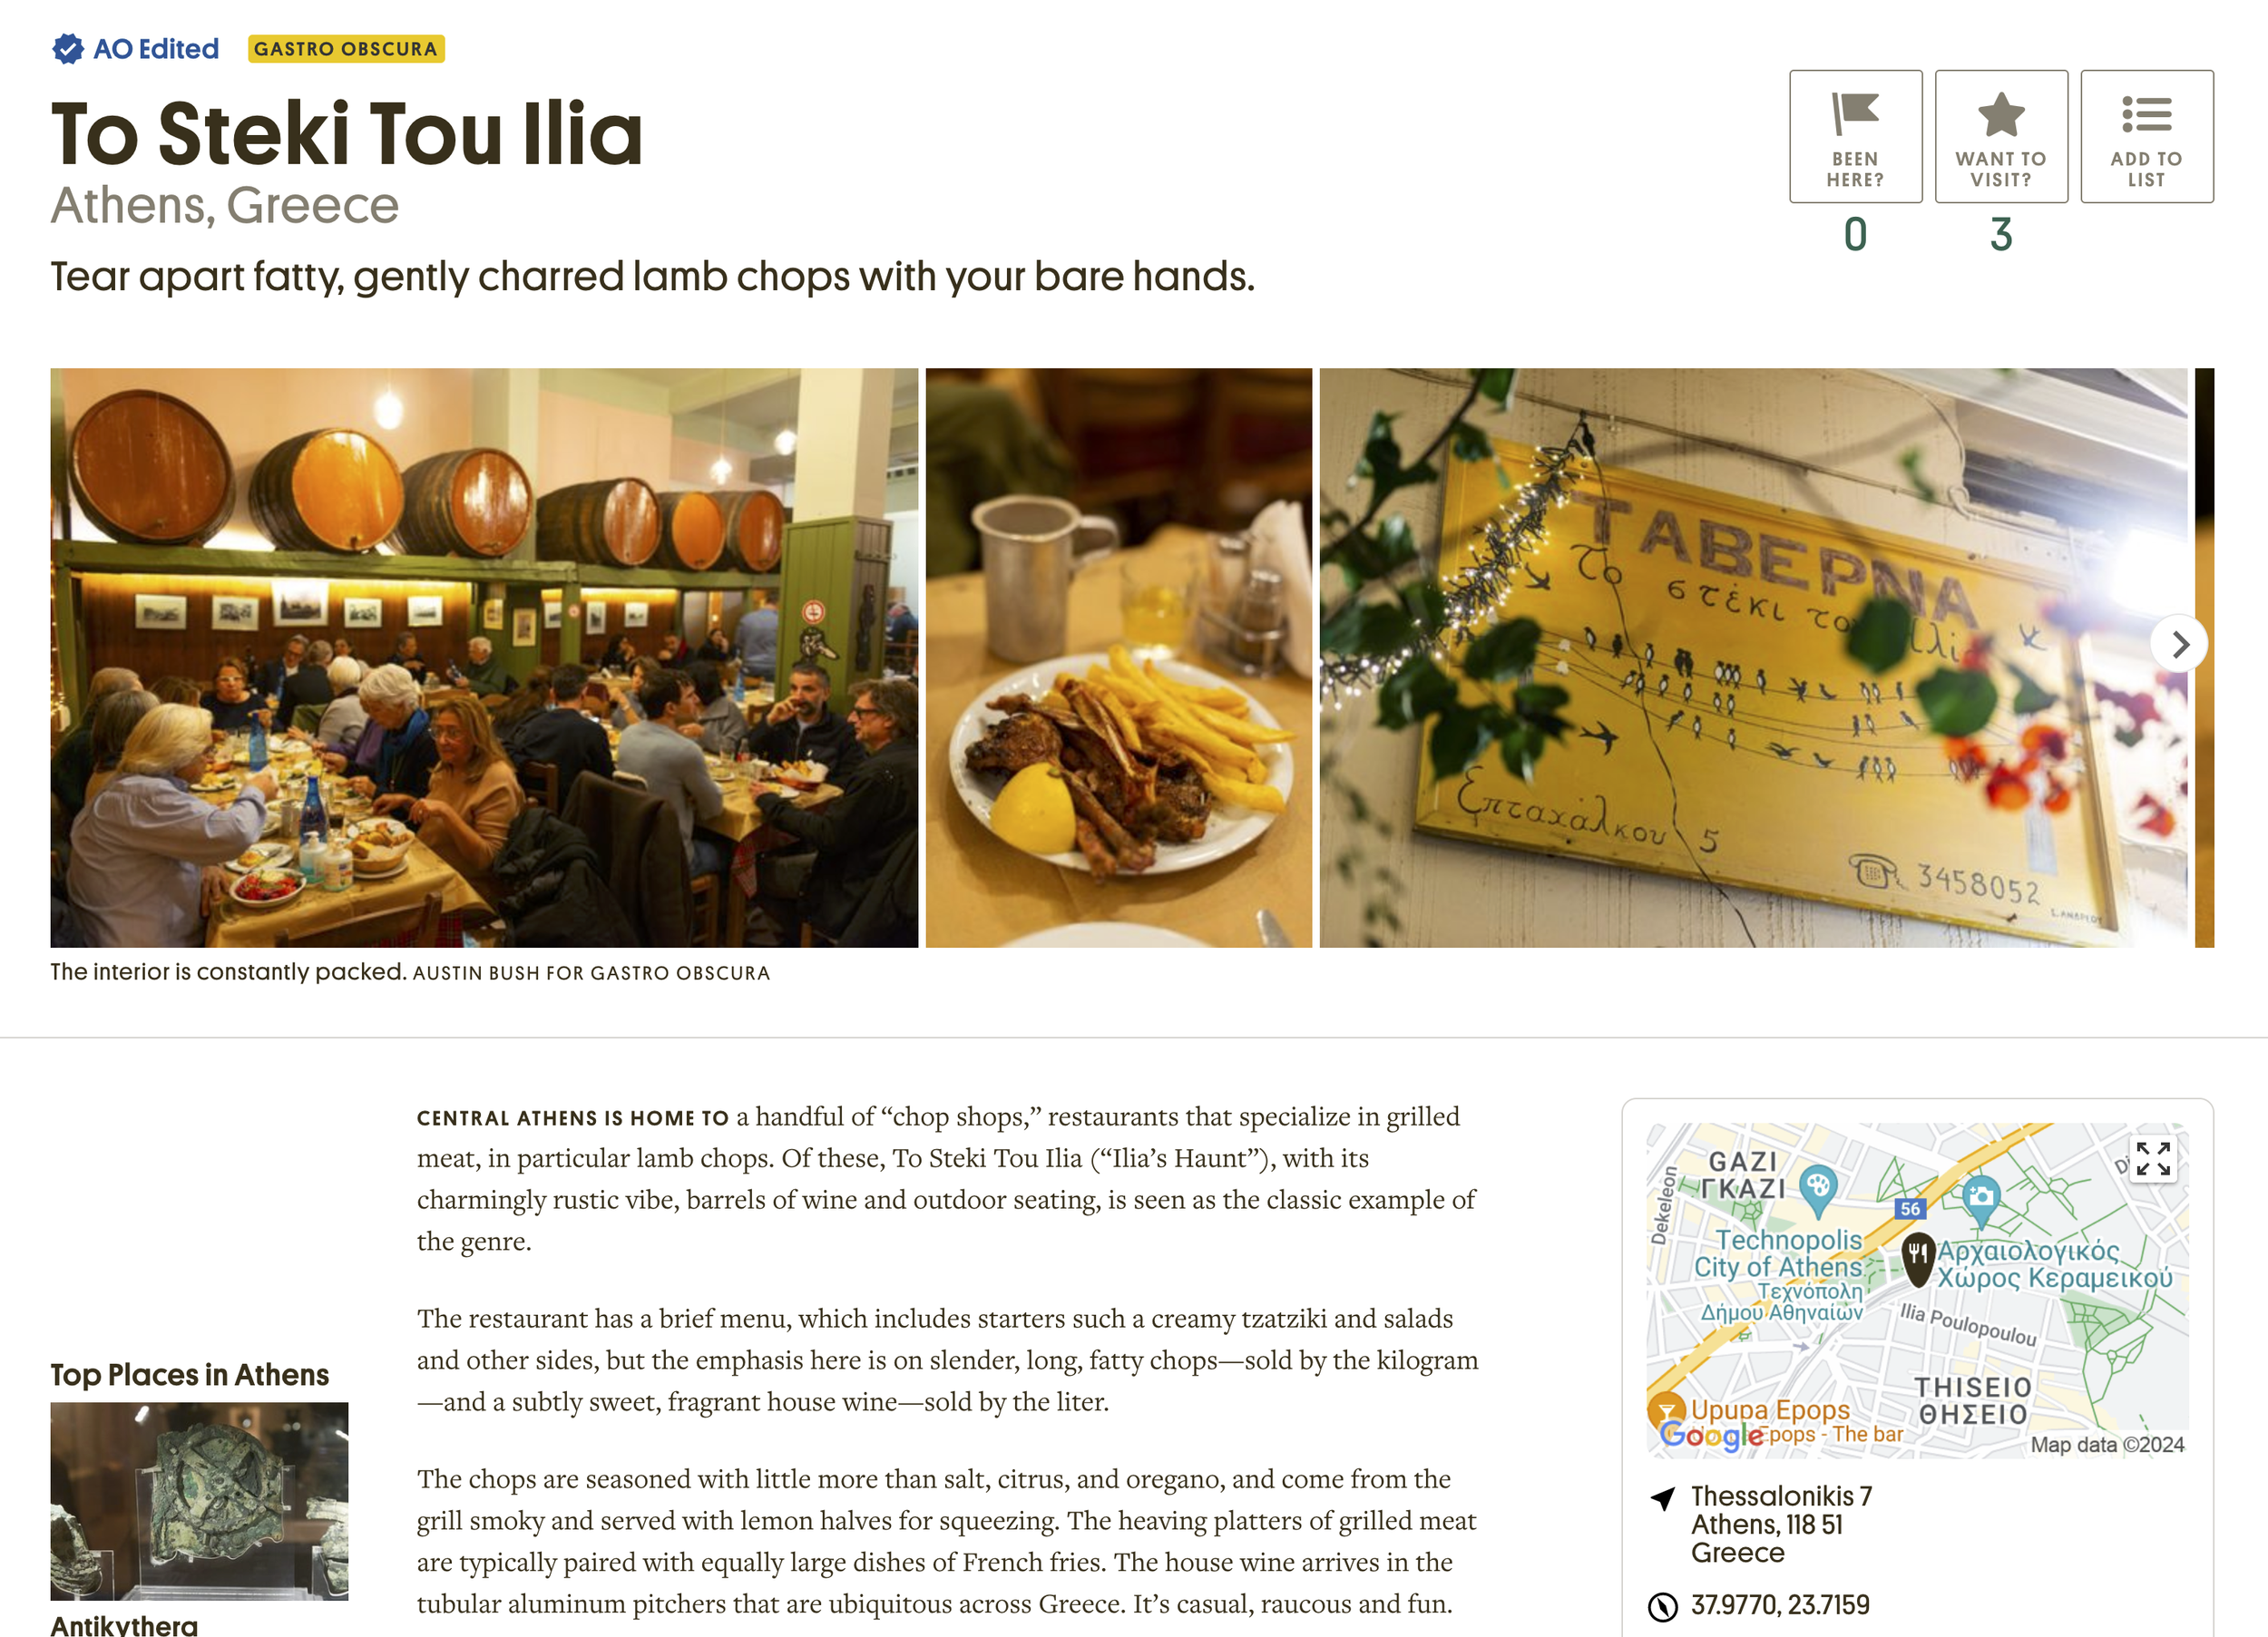  Click here to go to this article: “ To Steki Tou Ilia ,” text and photos, Gastro Obscura 